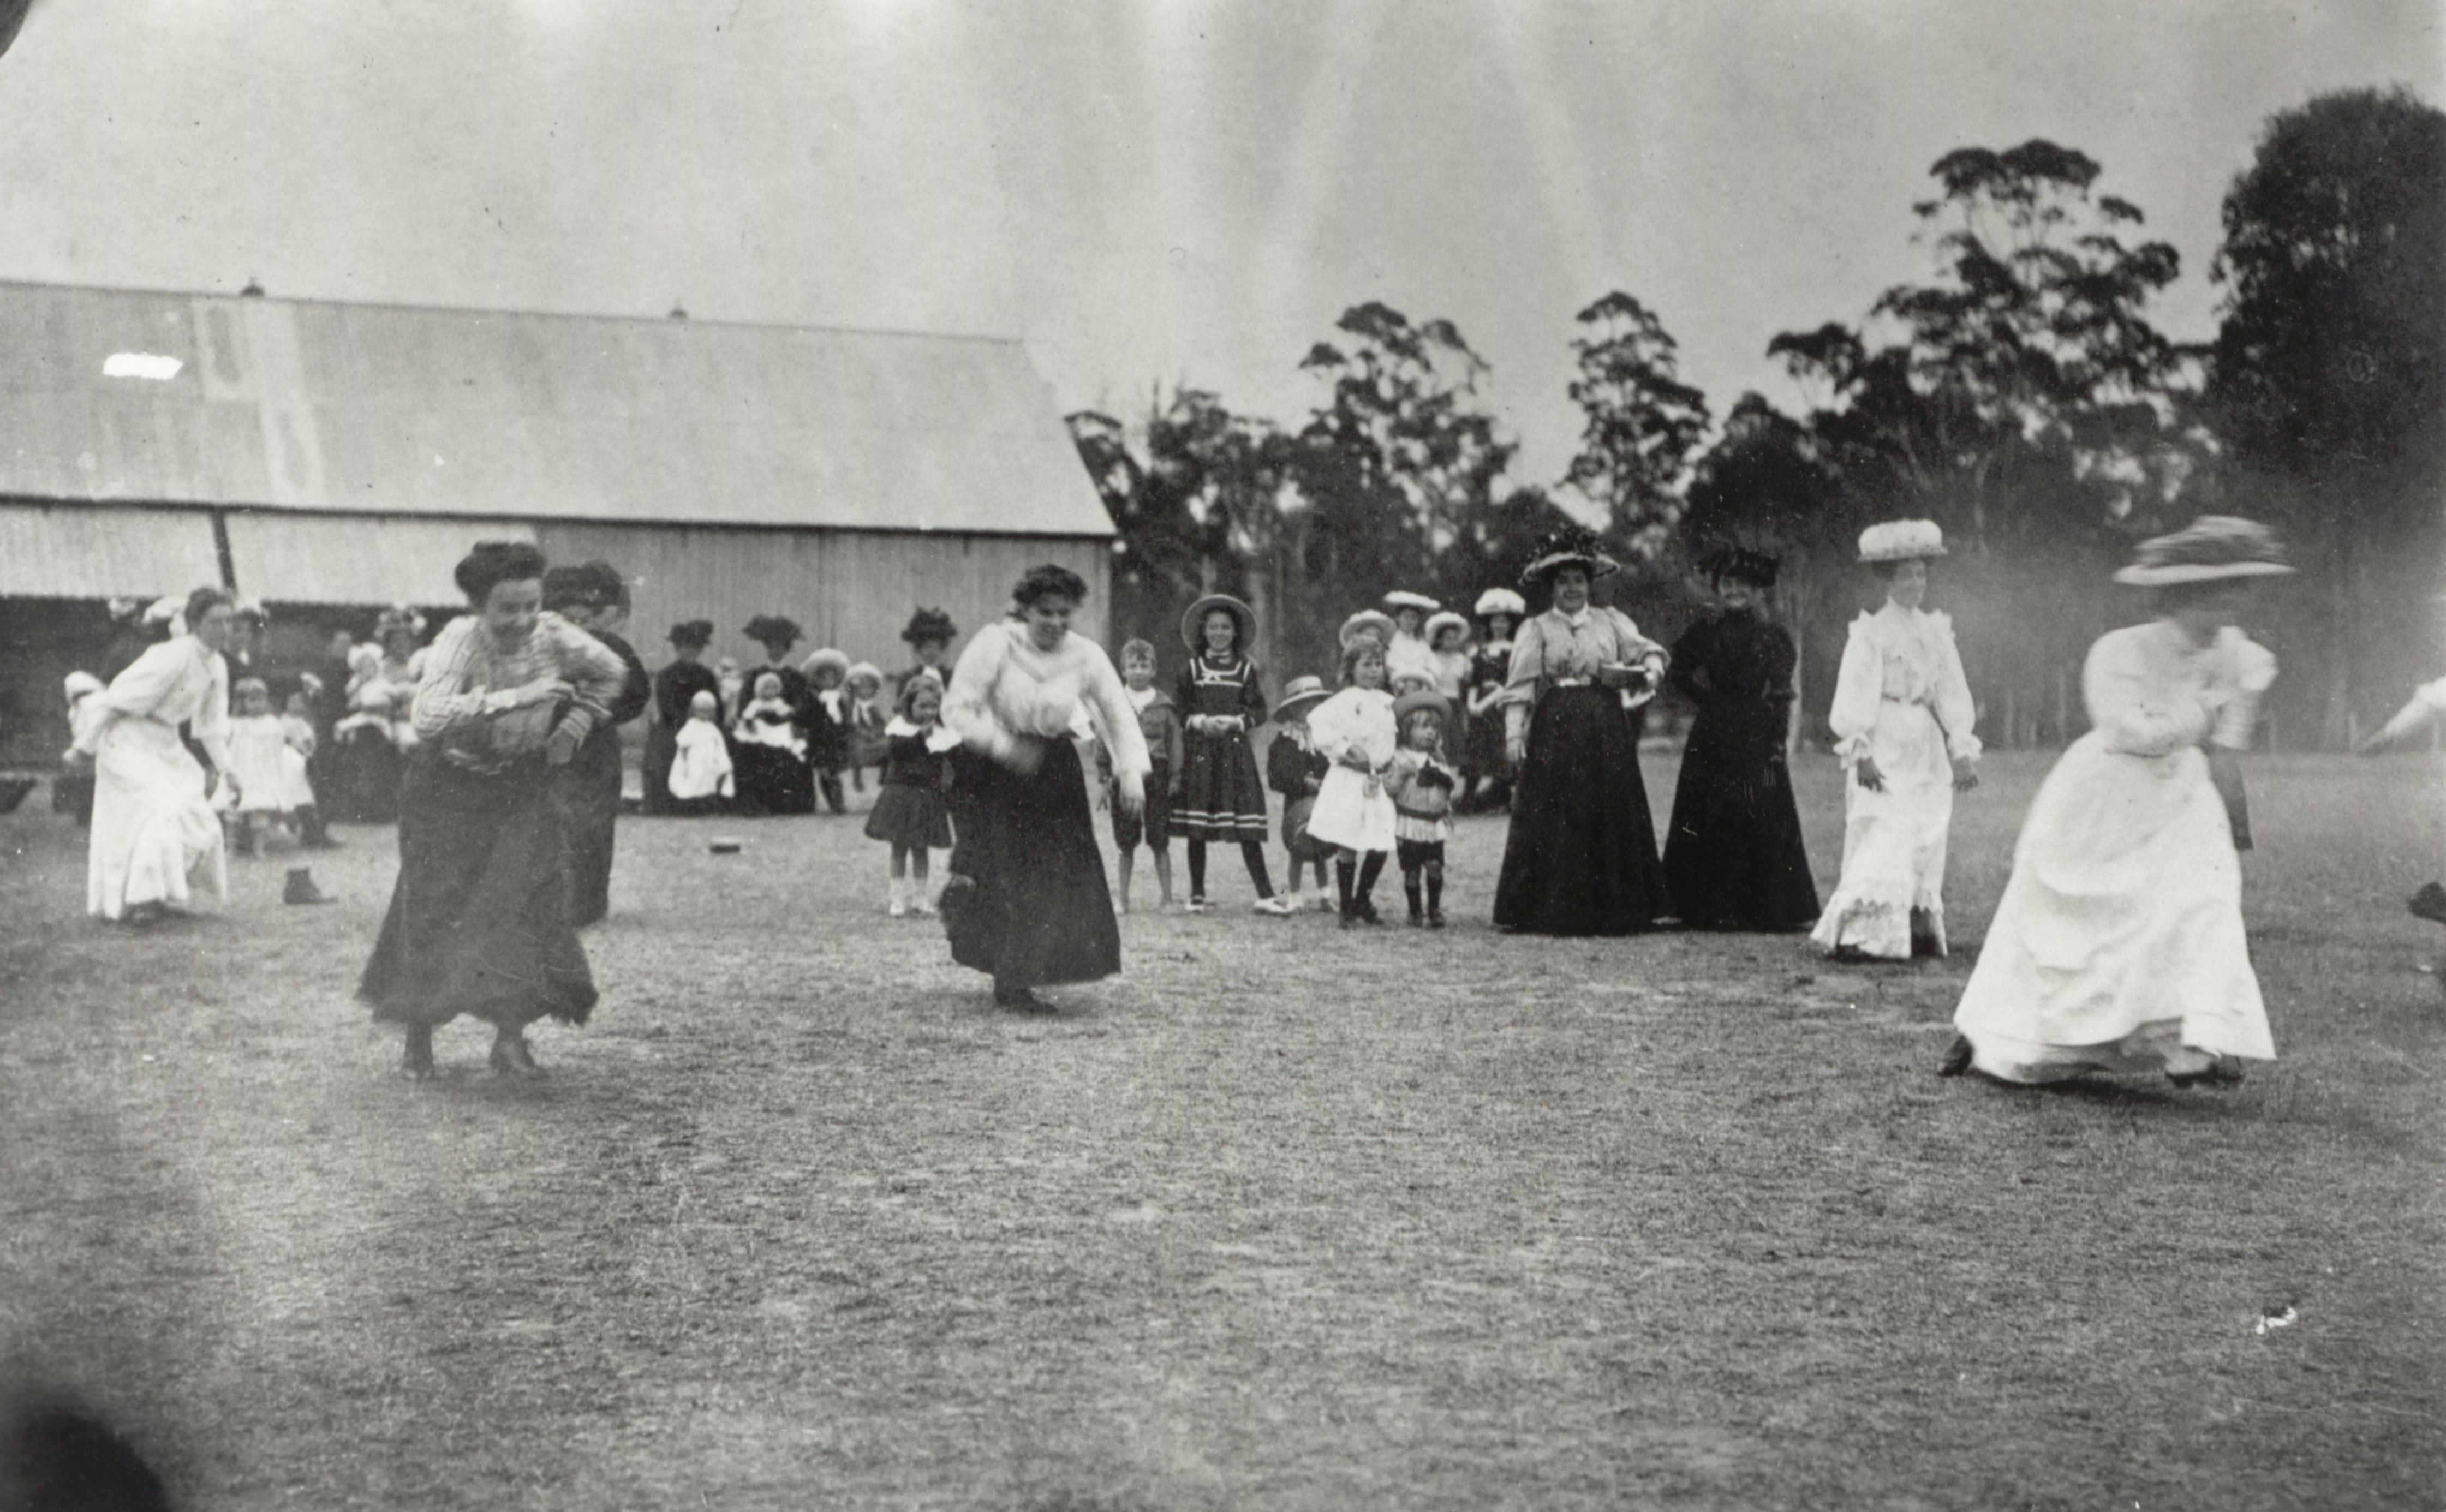 Women in Edwardian fashion running past spectators